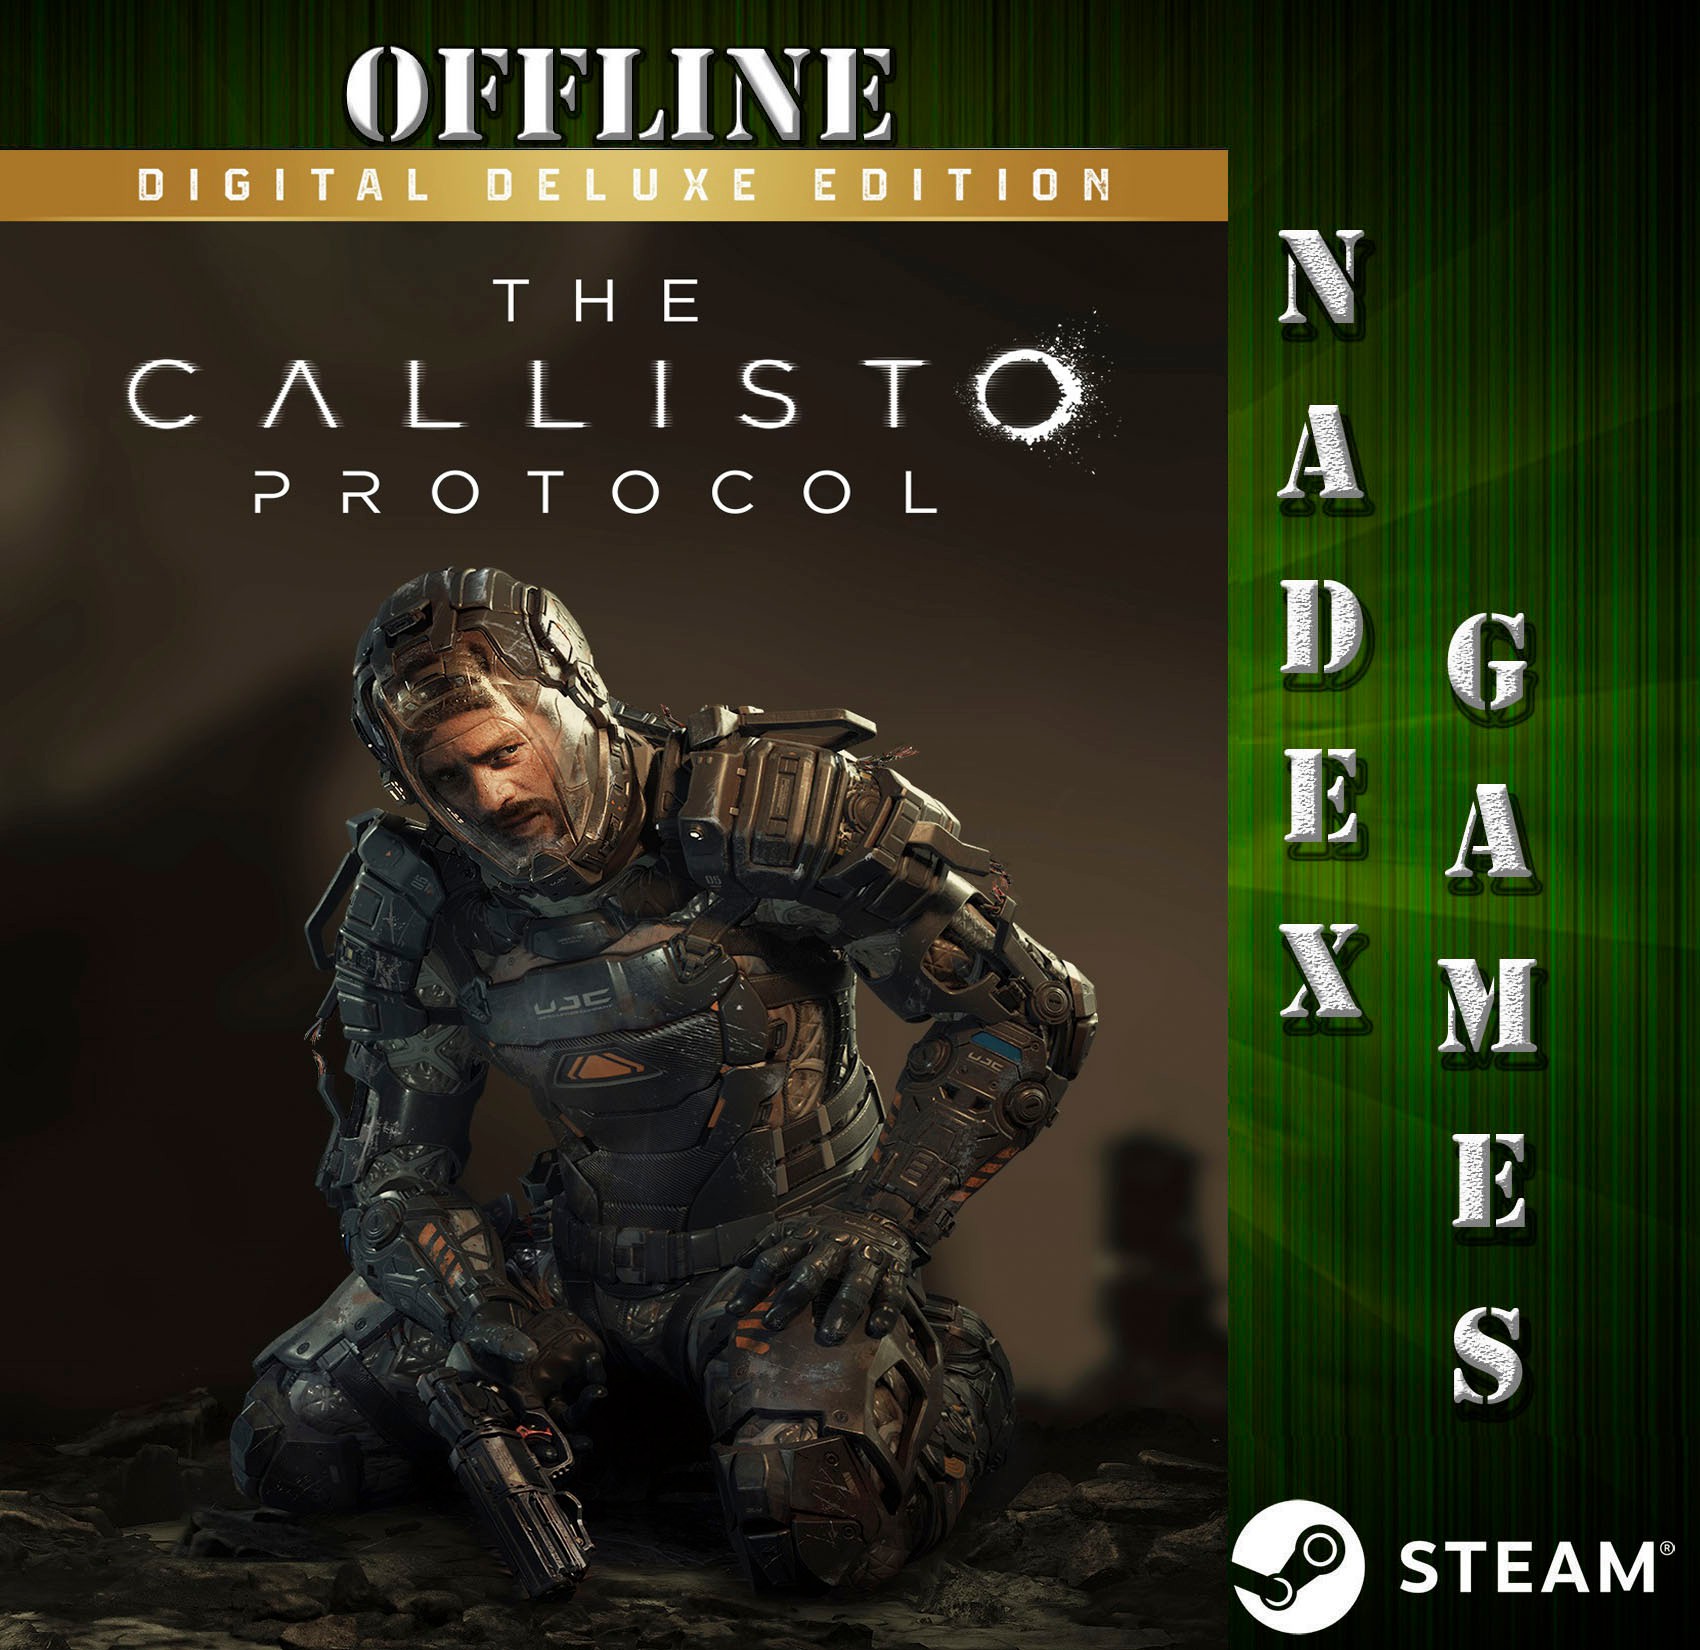 The Callisto Protocol™ on Steam